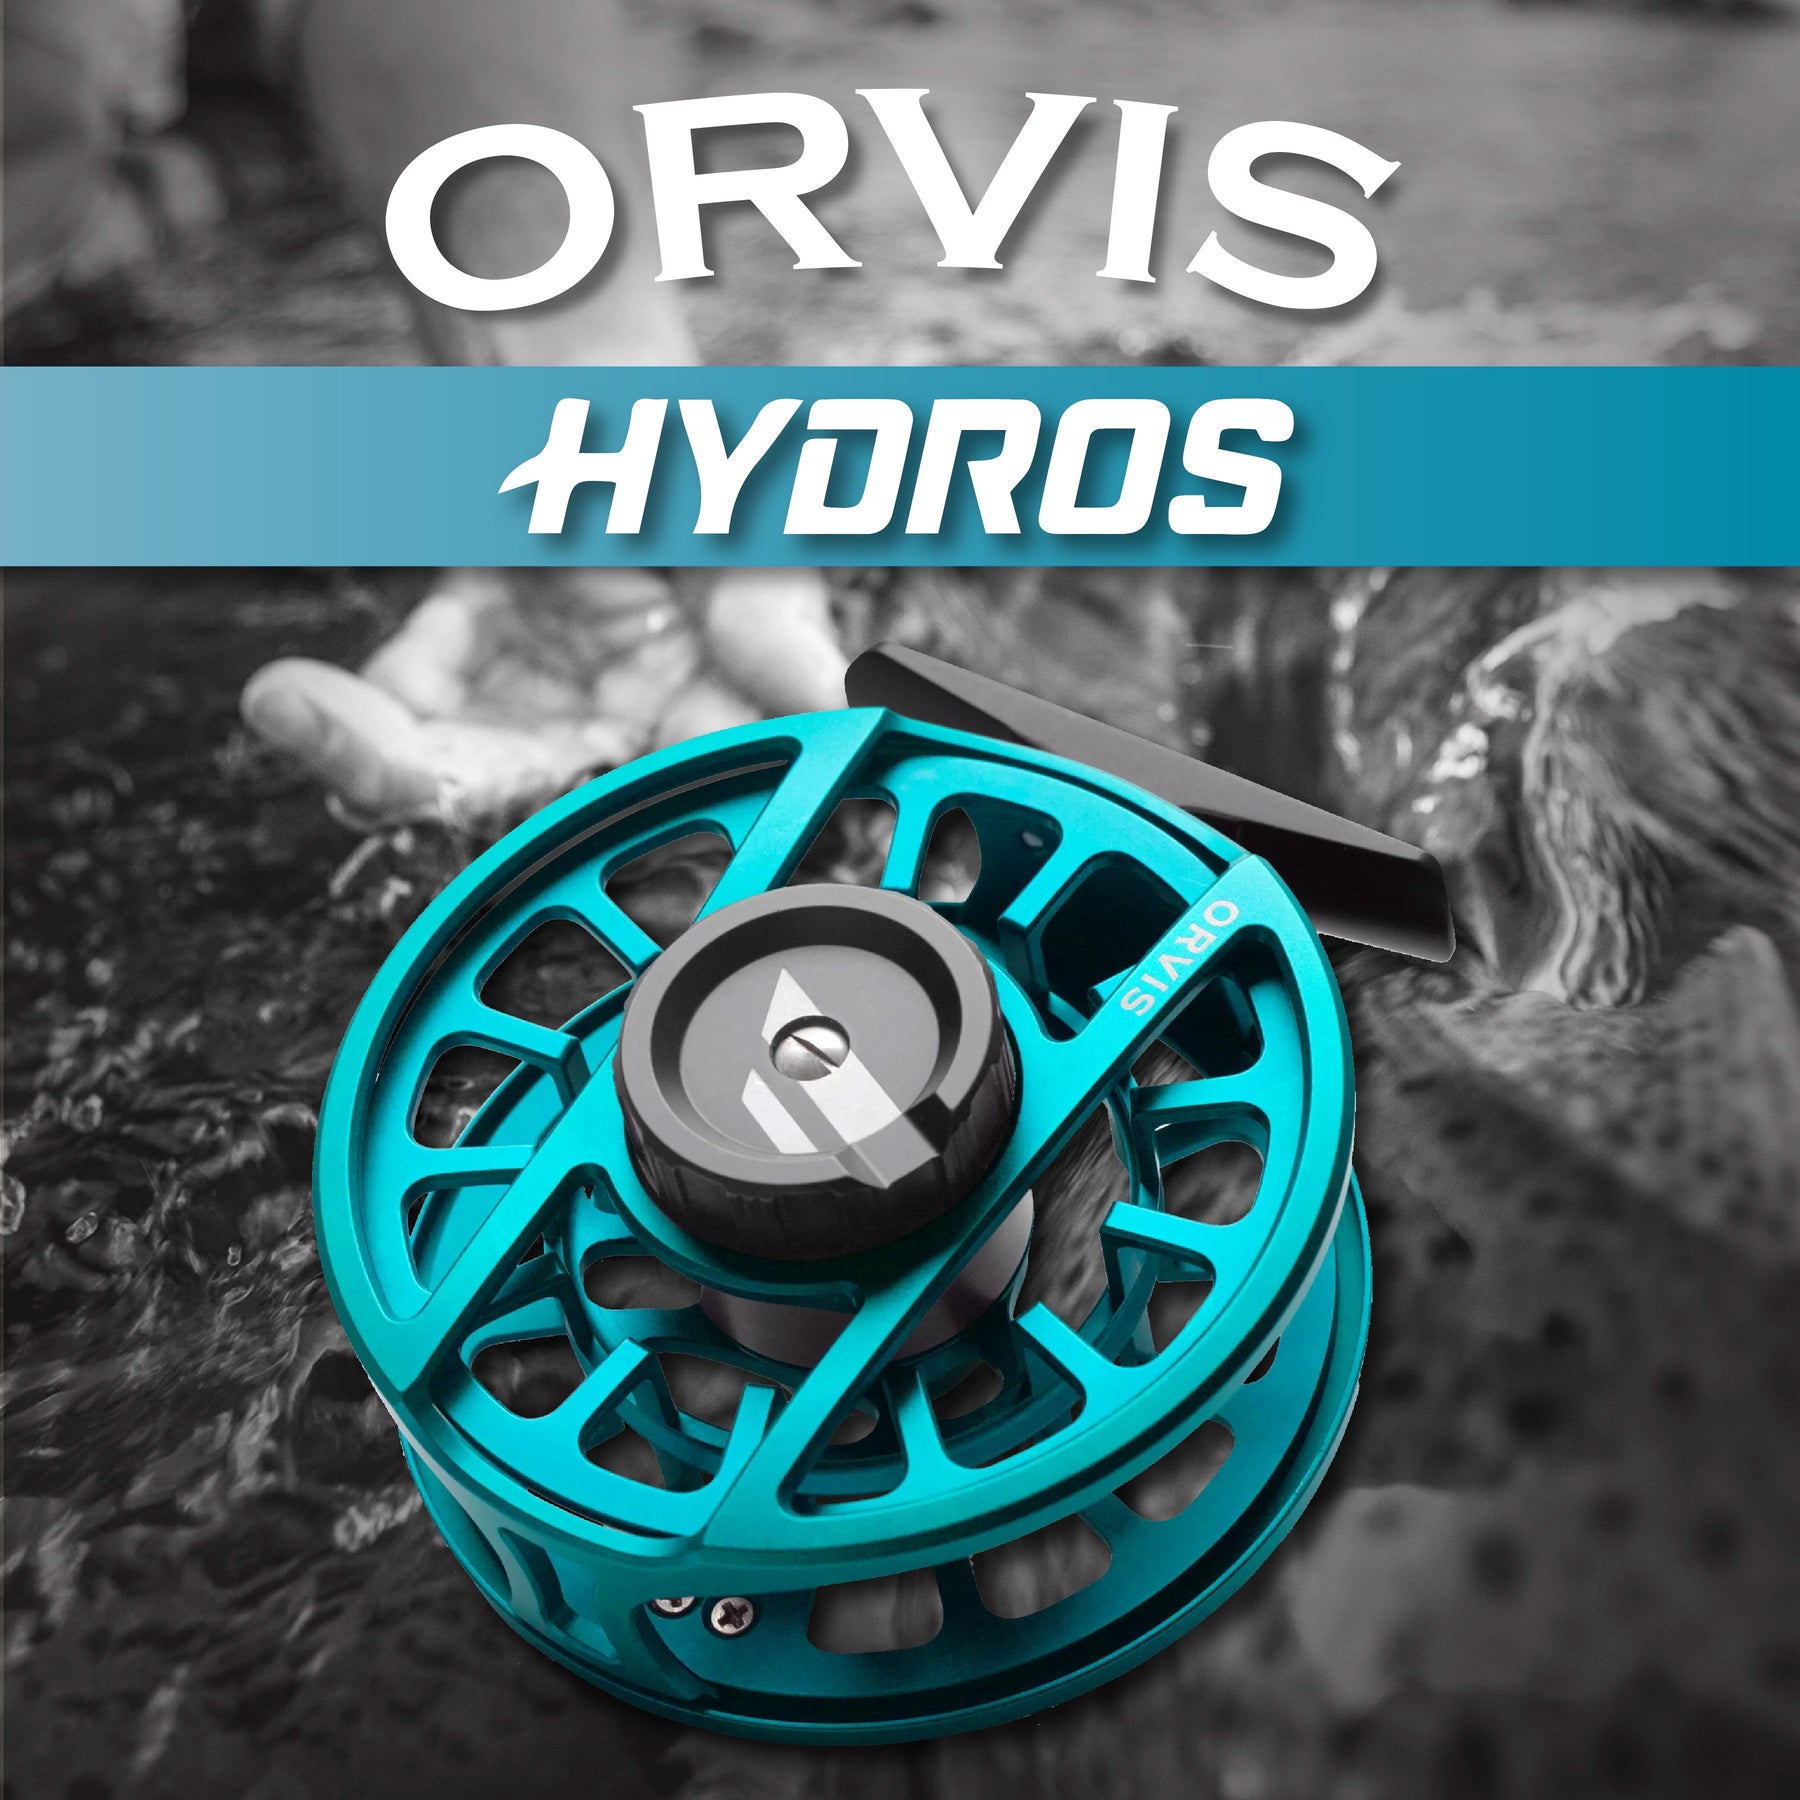 Orvis Hydros III Fly Fishing Reel - sporting goods - by owner